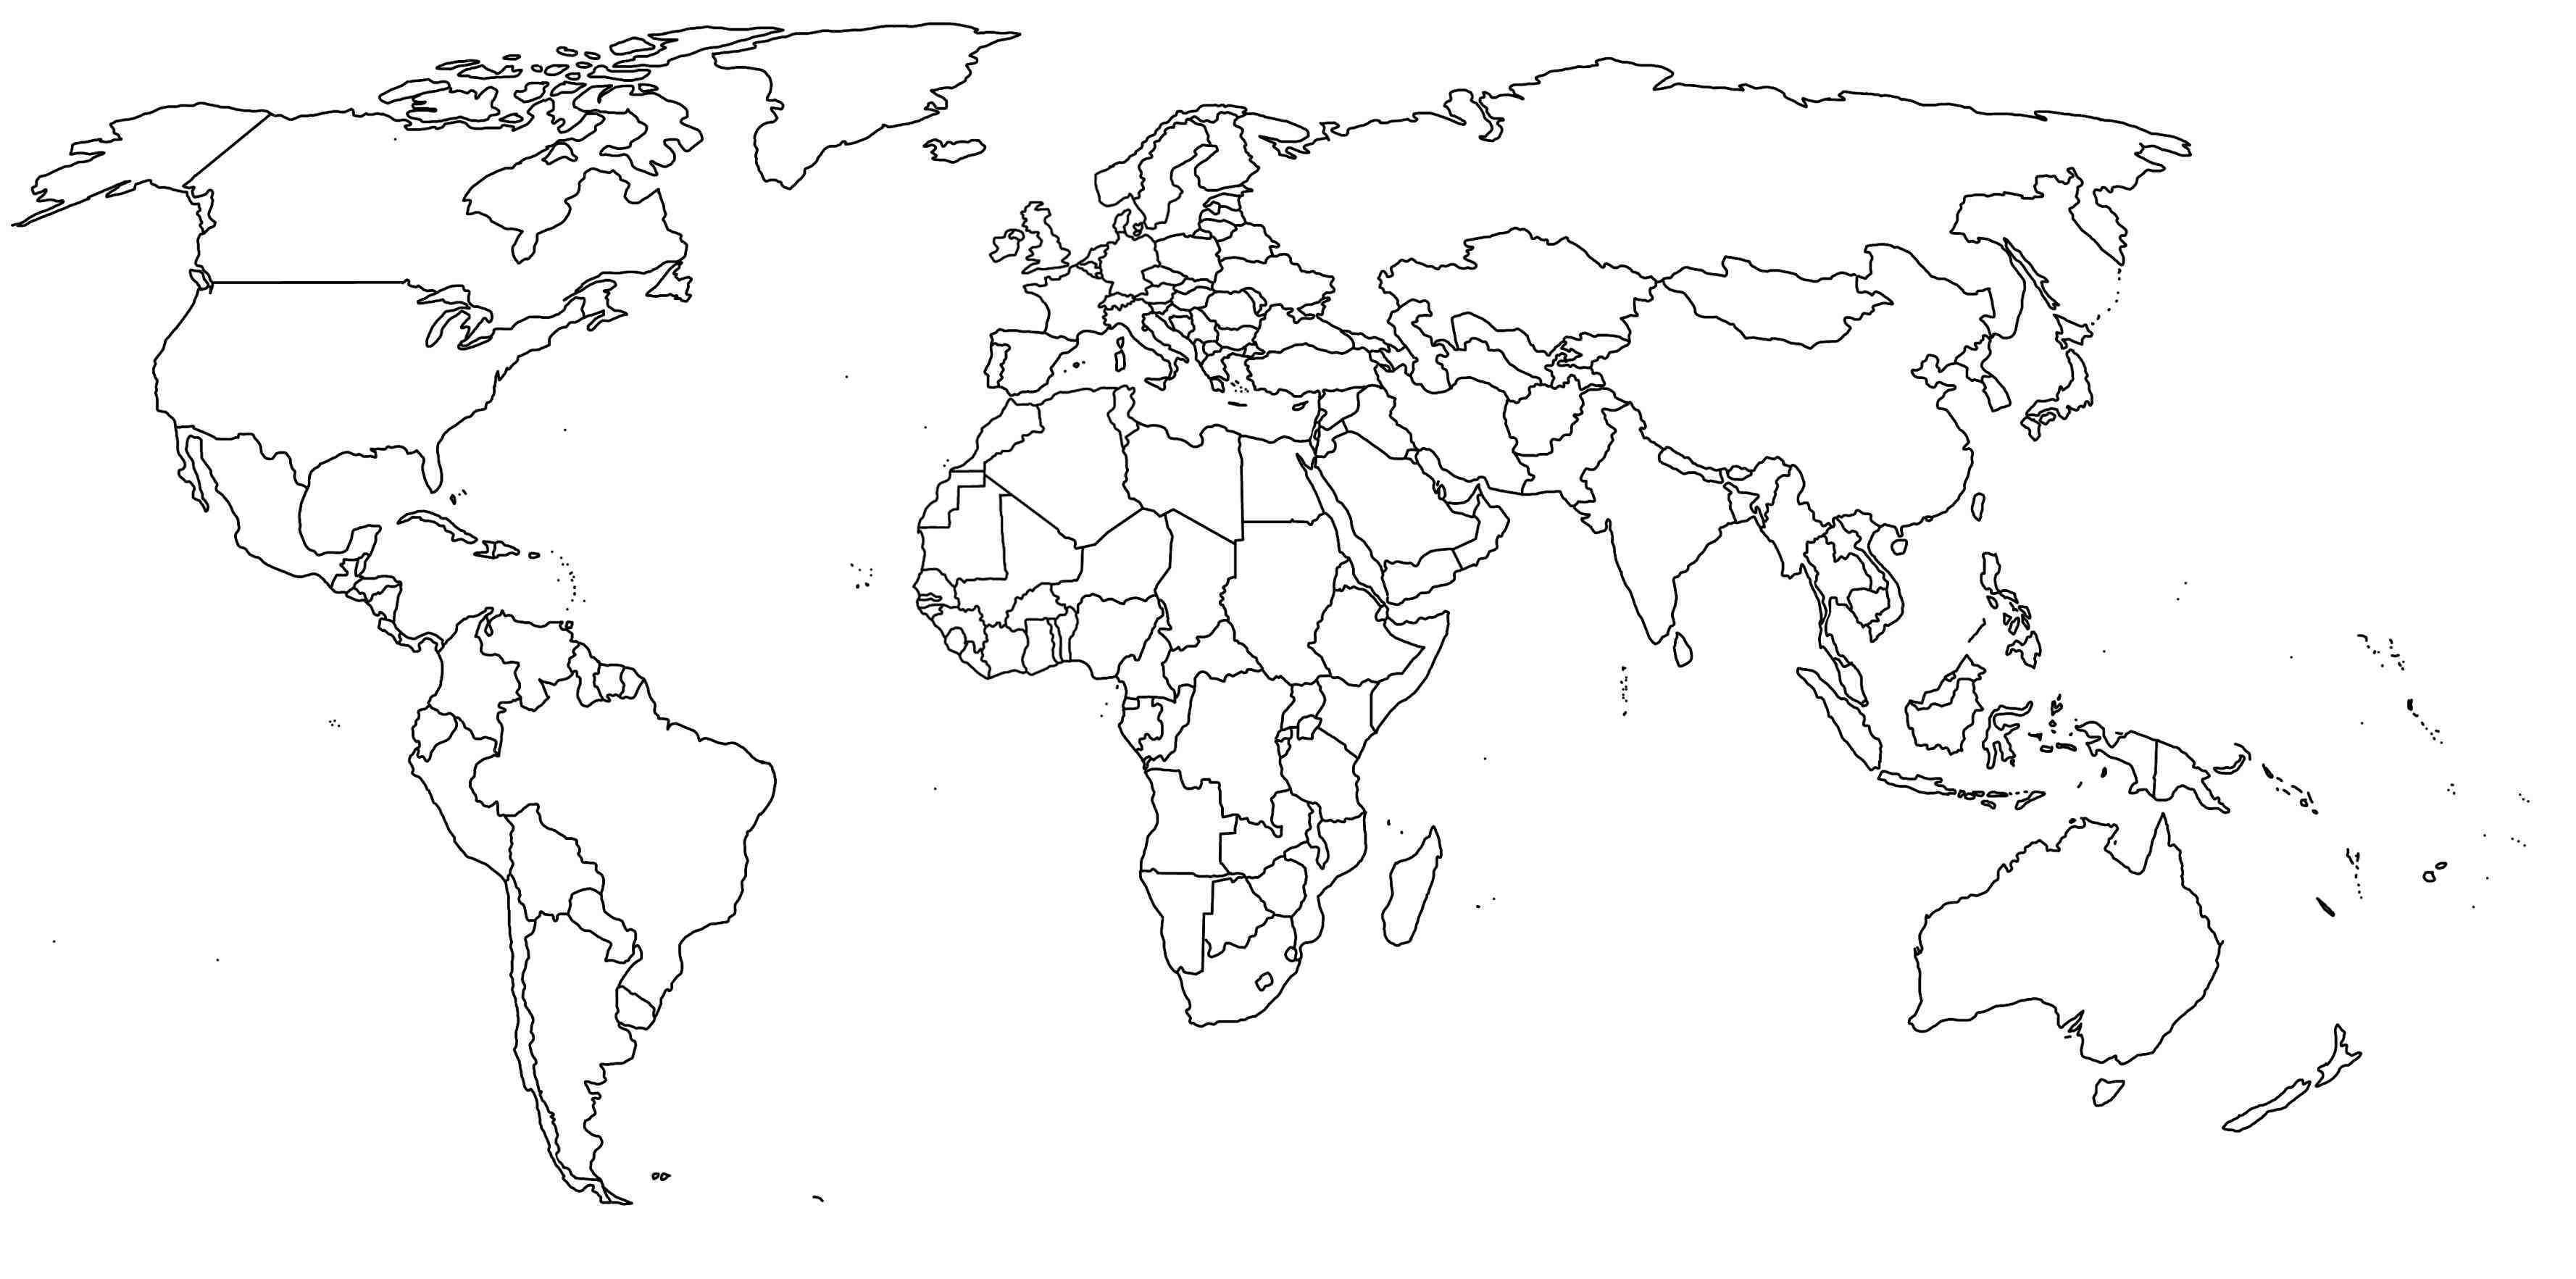 Free World Map Printable - Free World Maps Collection - Free Printable World Map With Countries Labeled